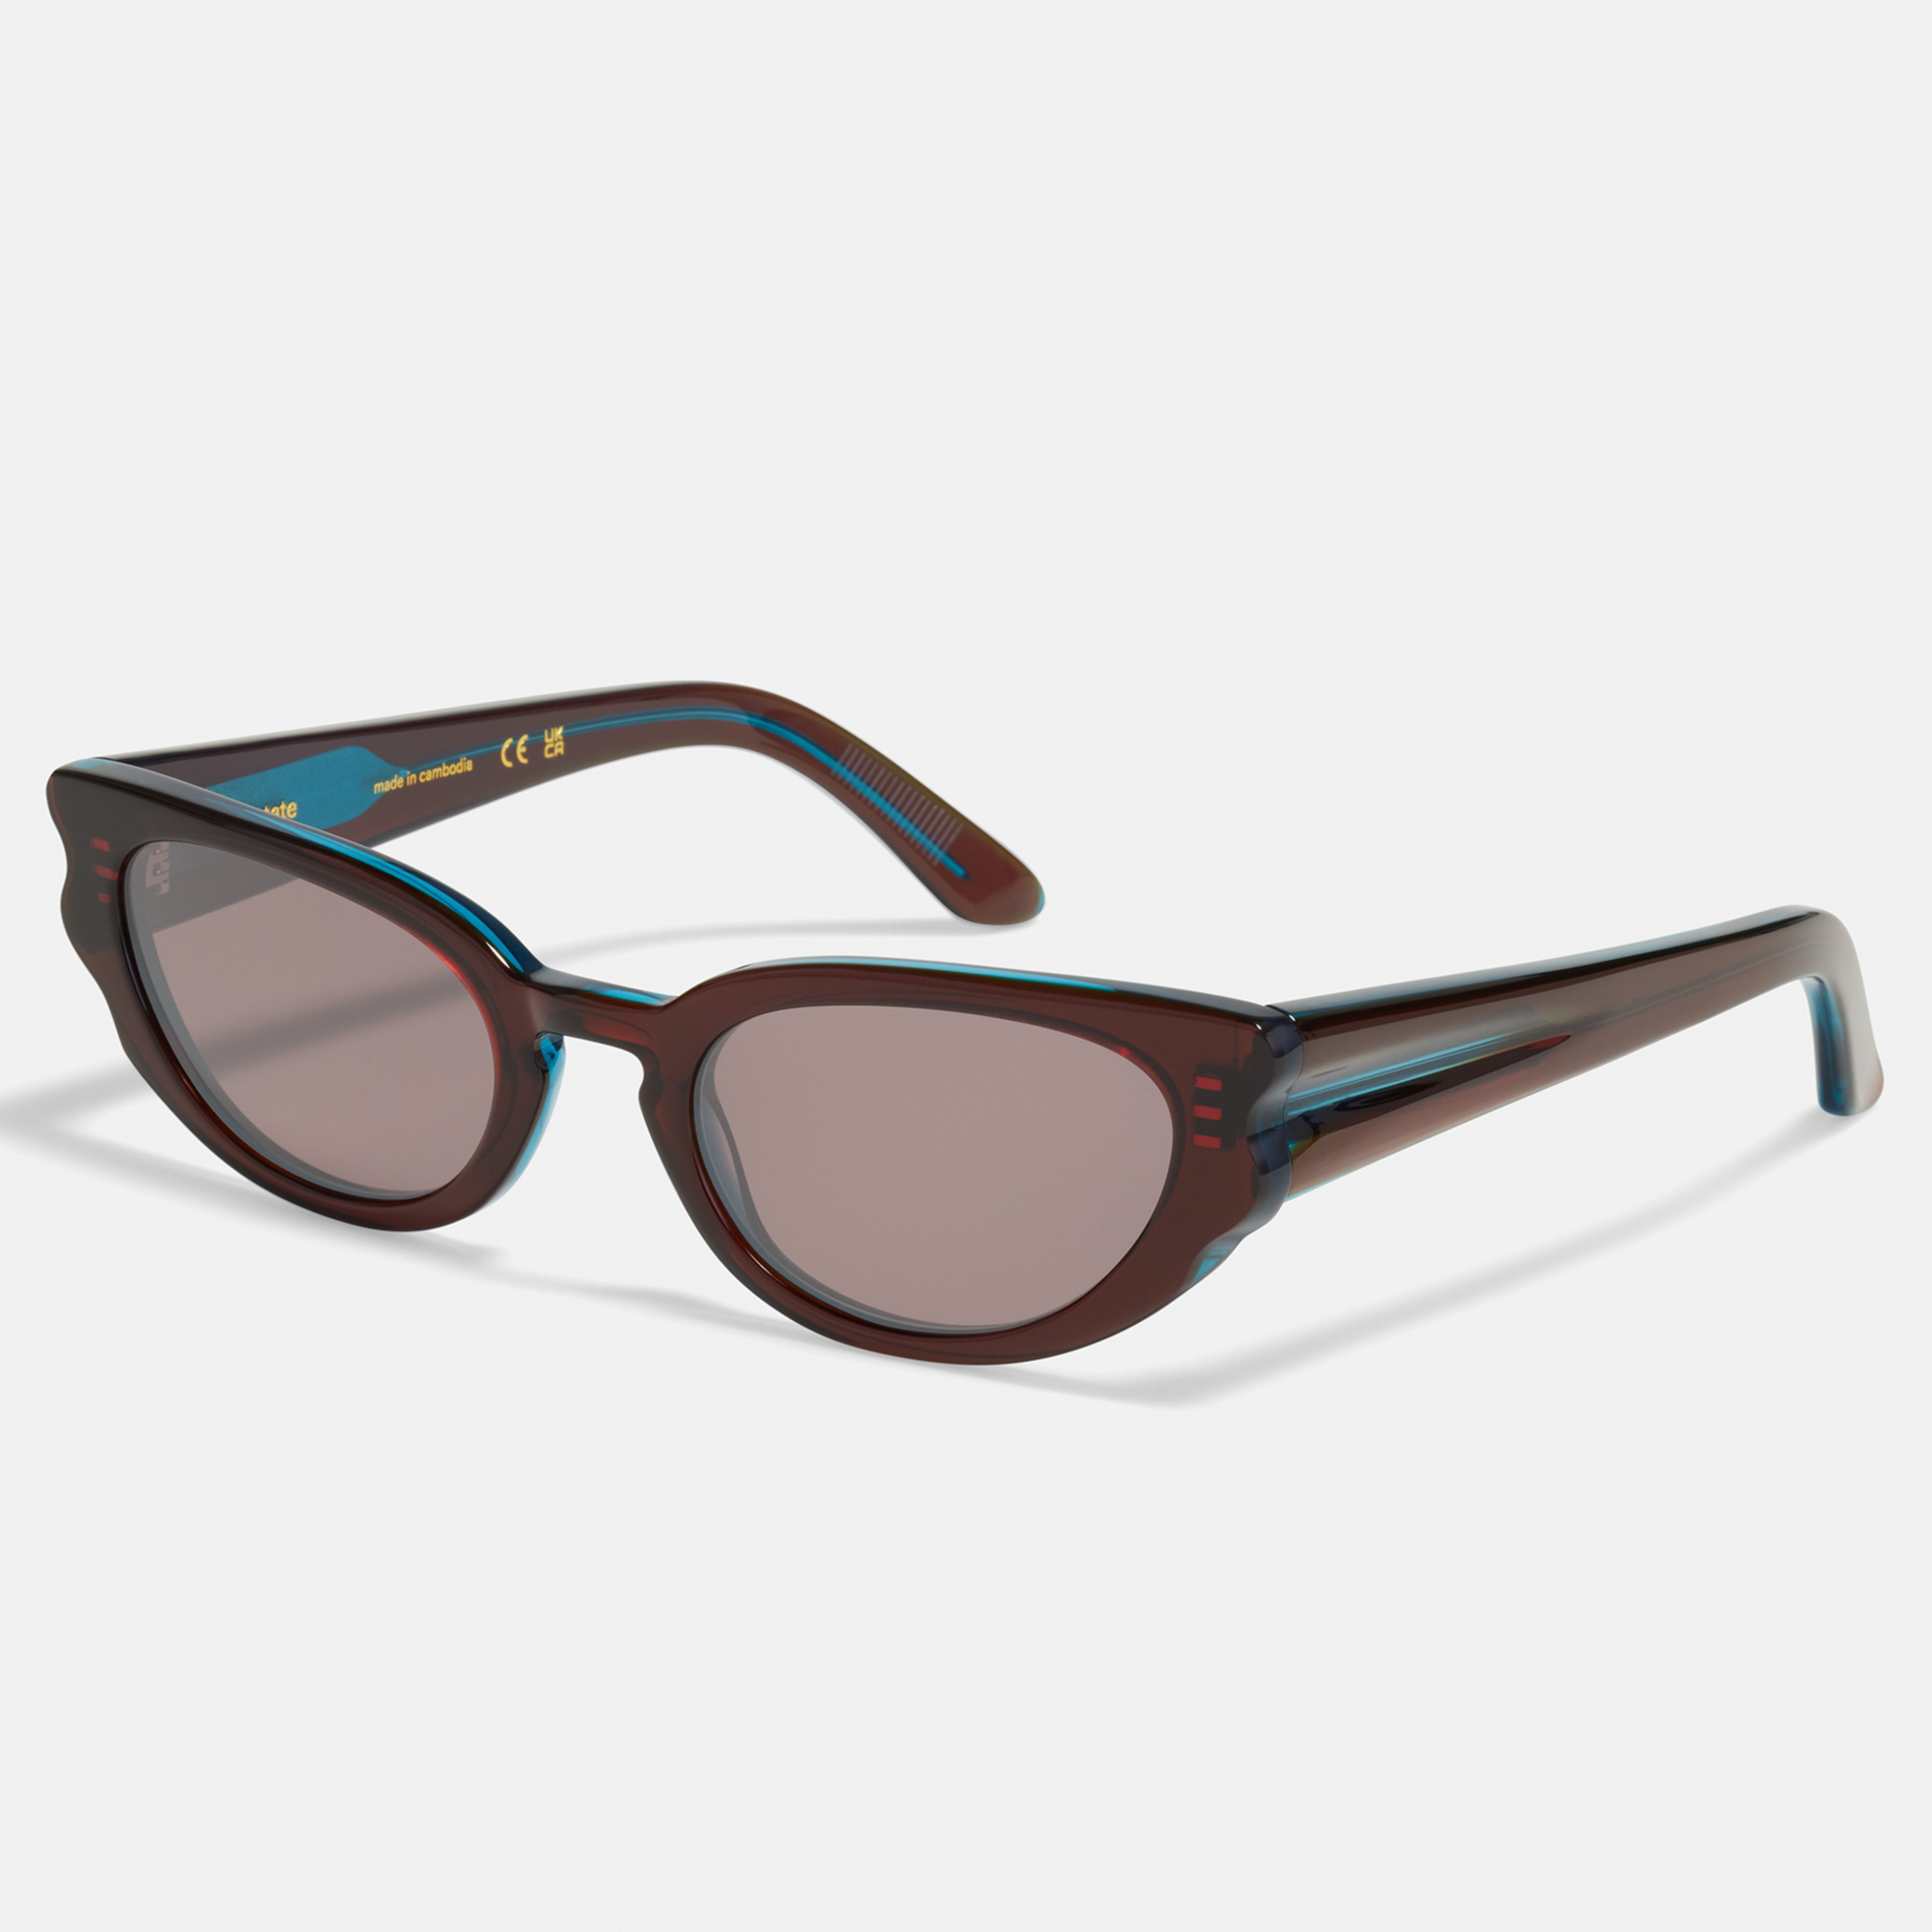 Ace & Tate Sunglasses | oval Renew bio acetate in Blue, Brown